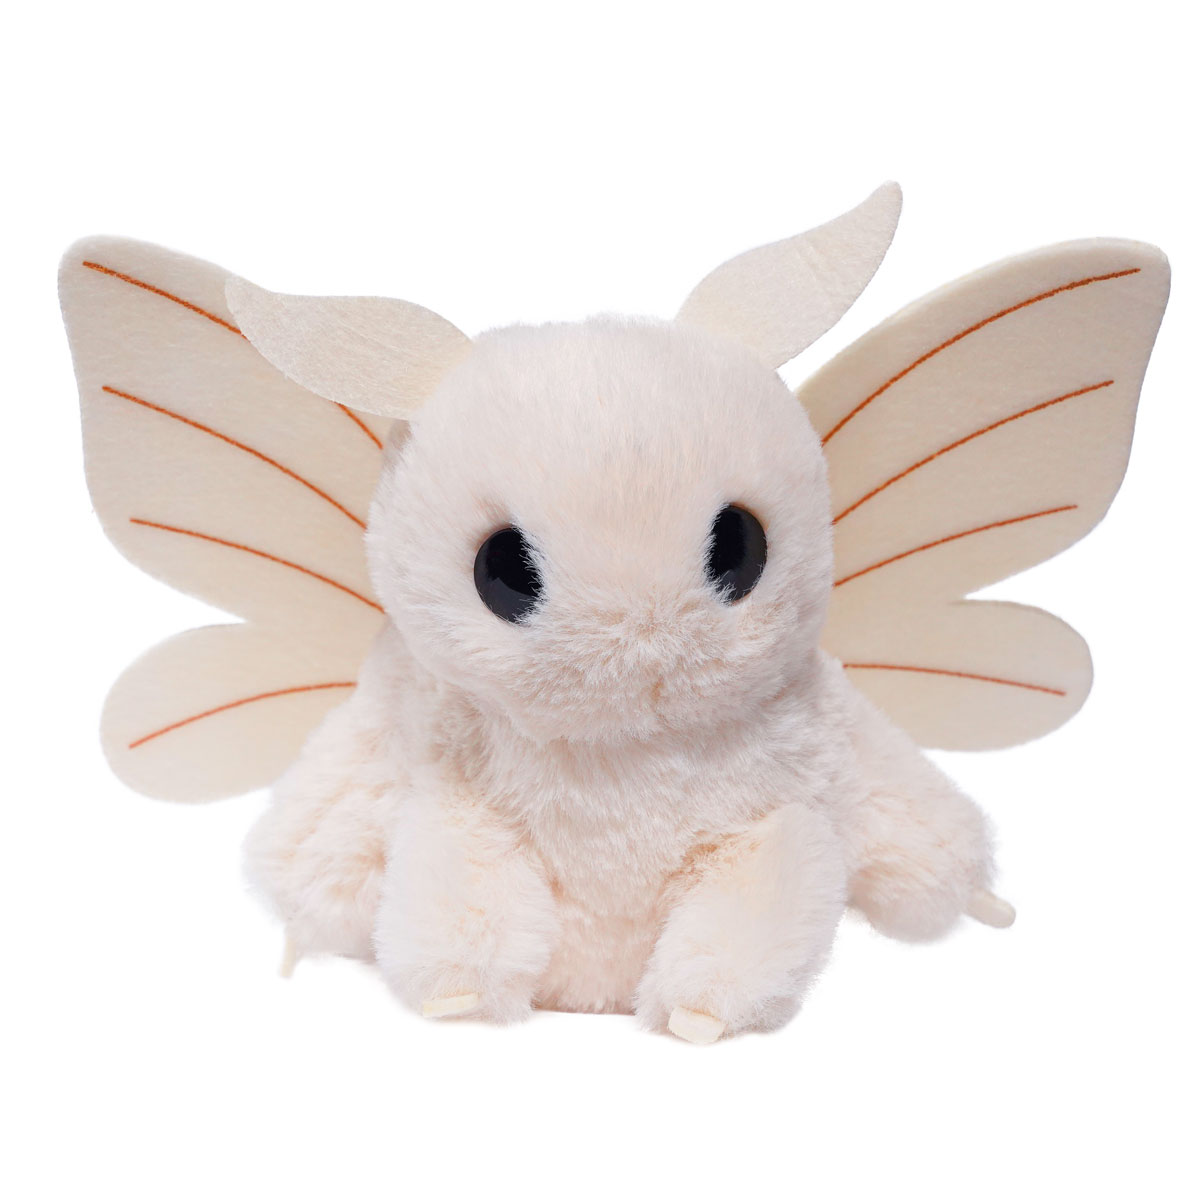 Poodle Moth Plush Toy Kawaii Stuffed Animal Beige Standard Size 5